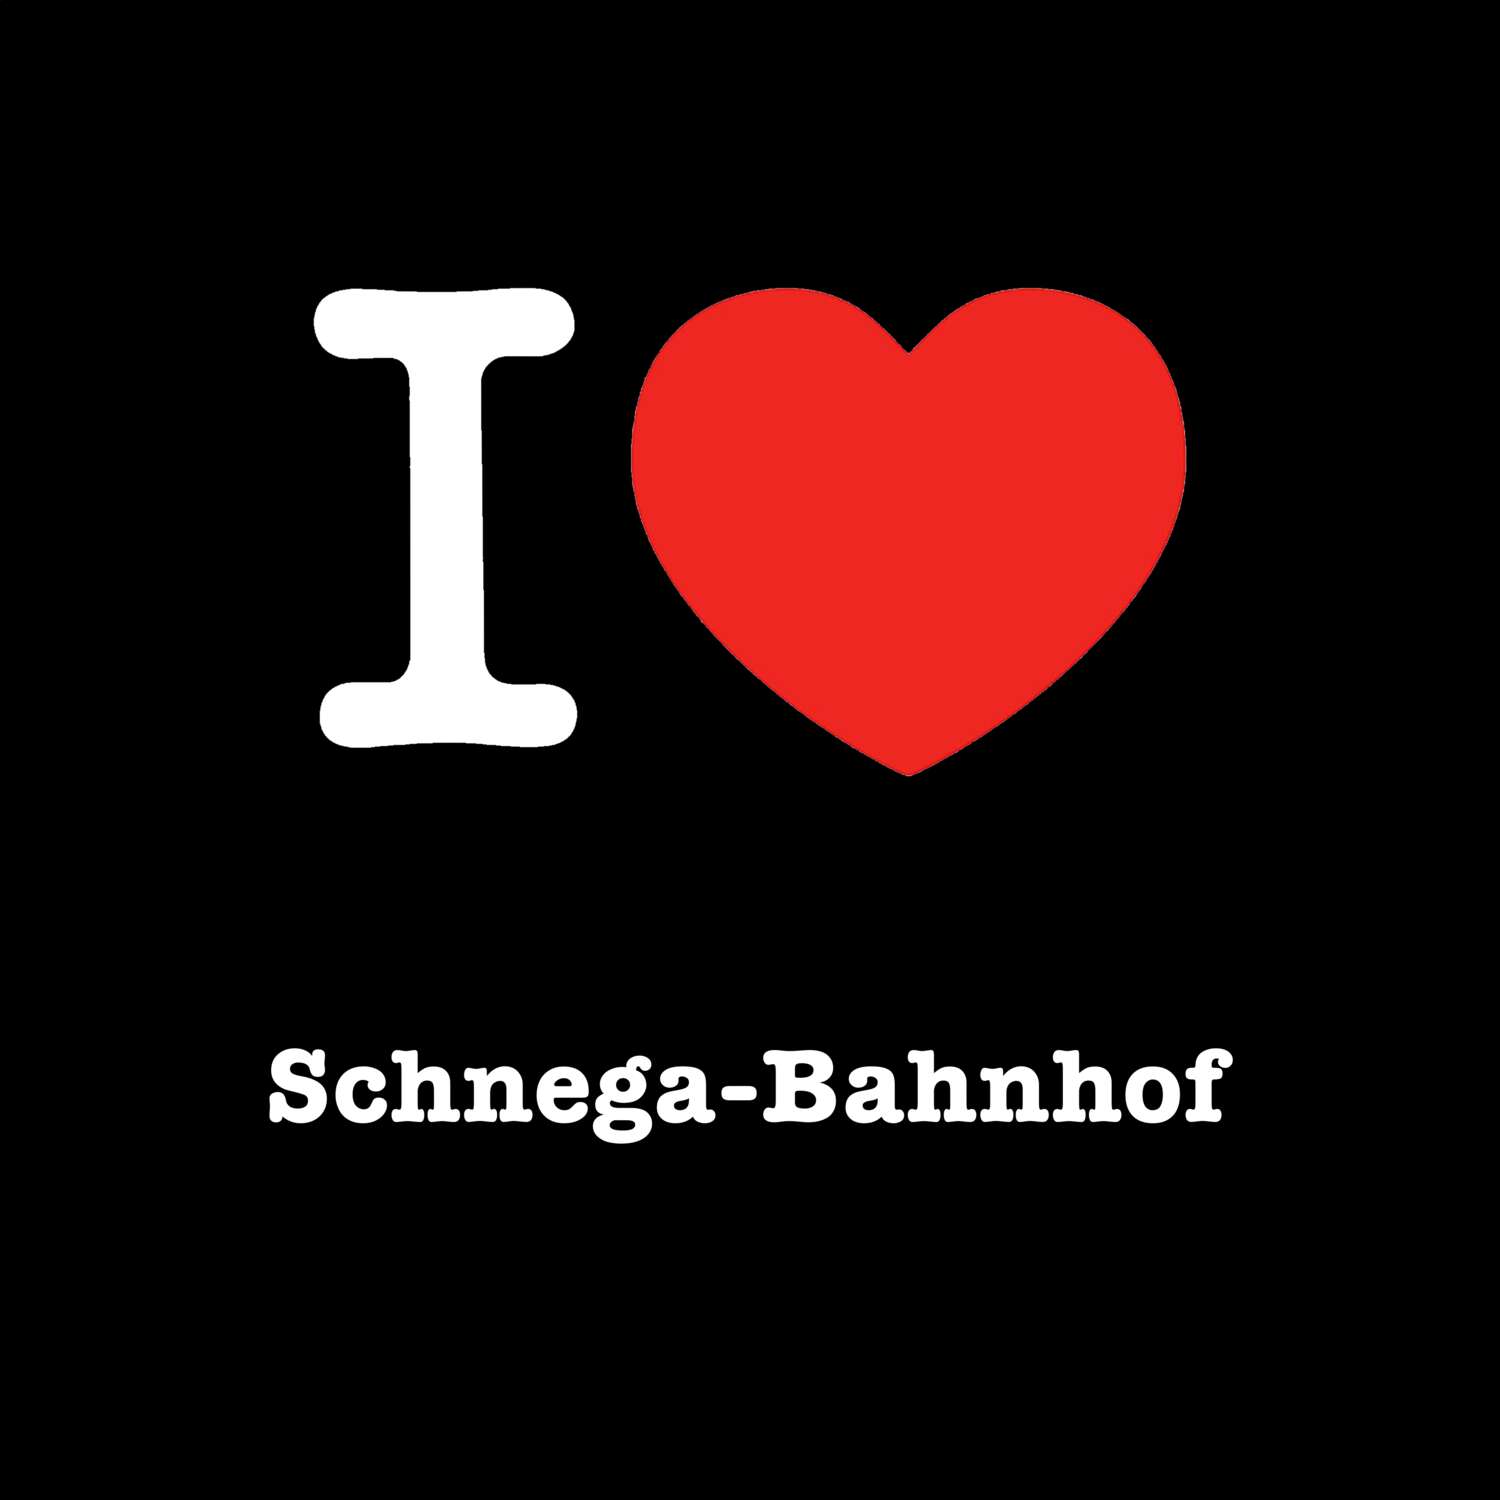 Schnega-Bahnhof T-Shirt »I love«